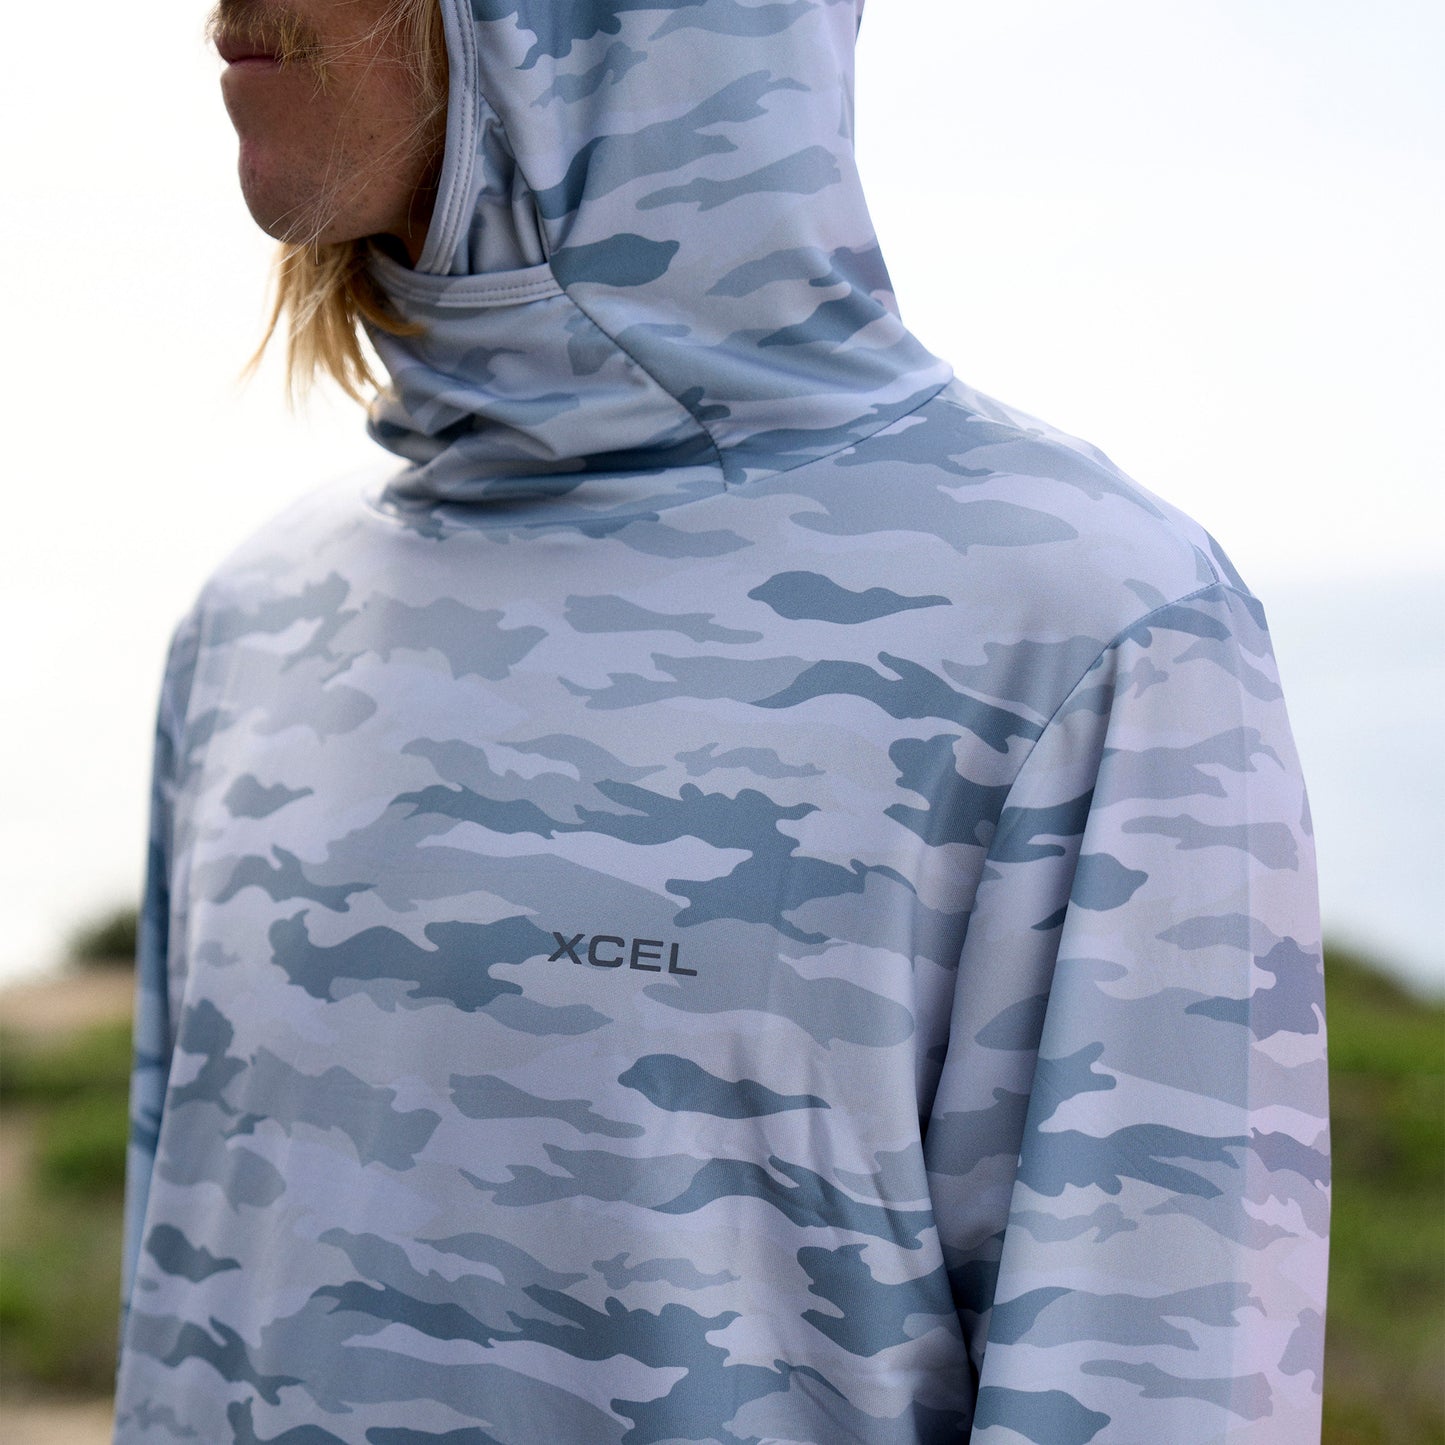 Men's ThreadX Hooded Pullover Long Sleeve Fishing Shirt W/Iceskin Facecover